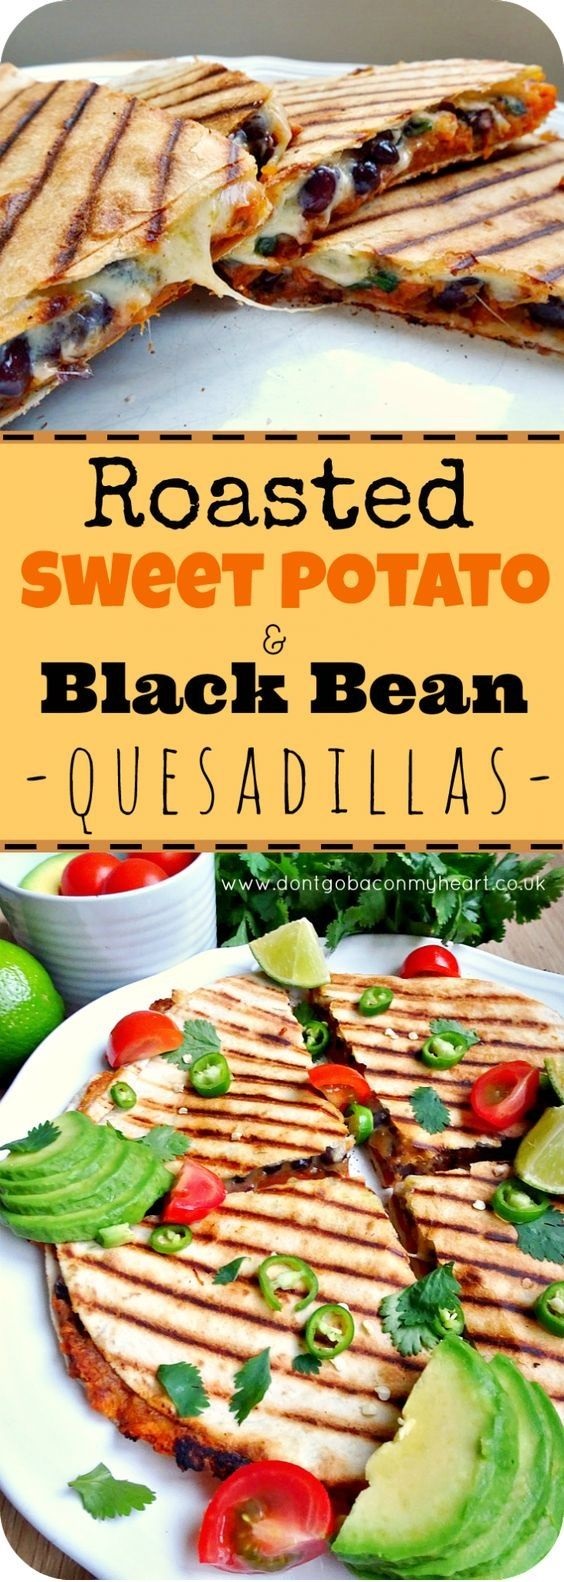 Roasted Sweet Potato And Black Bean Quesadillas - VICTORSDIARY